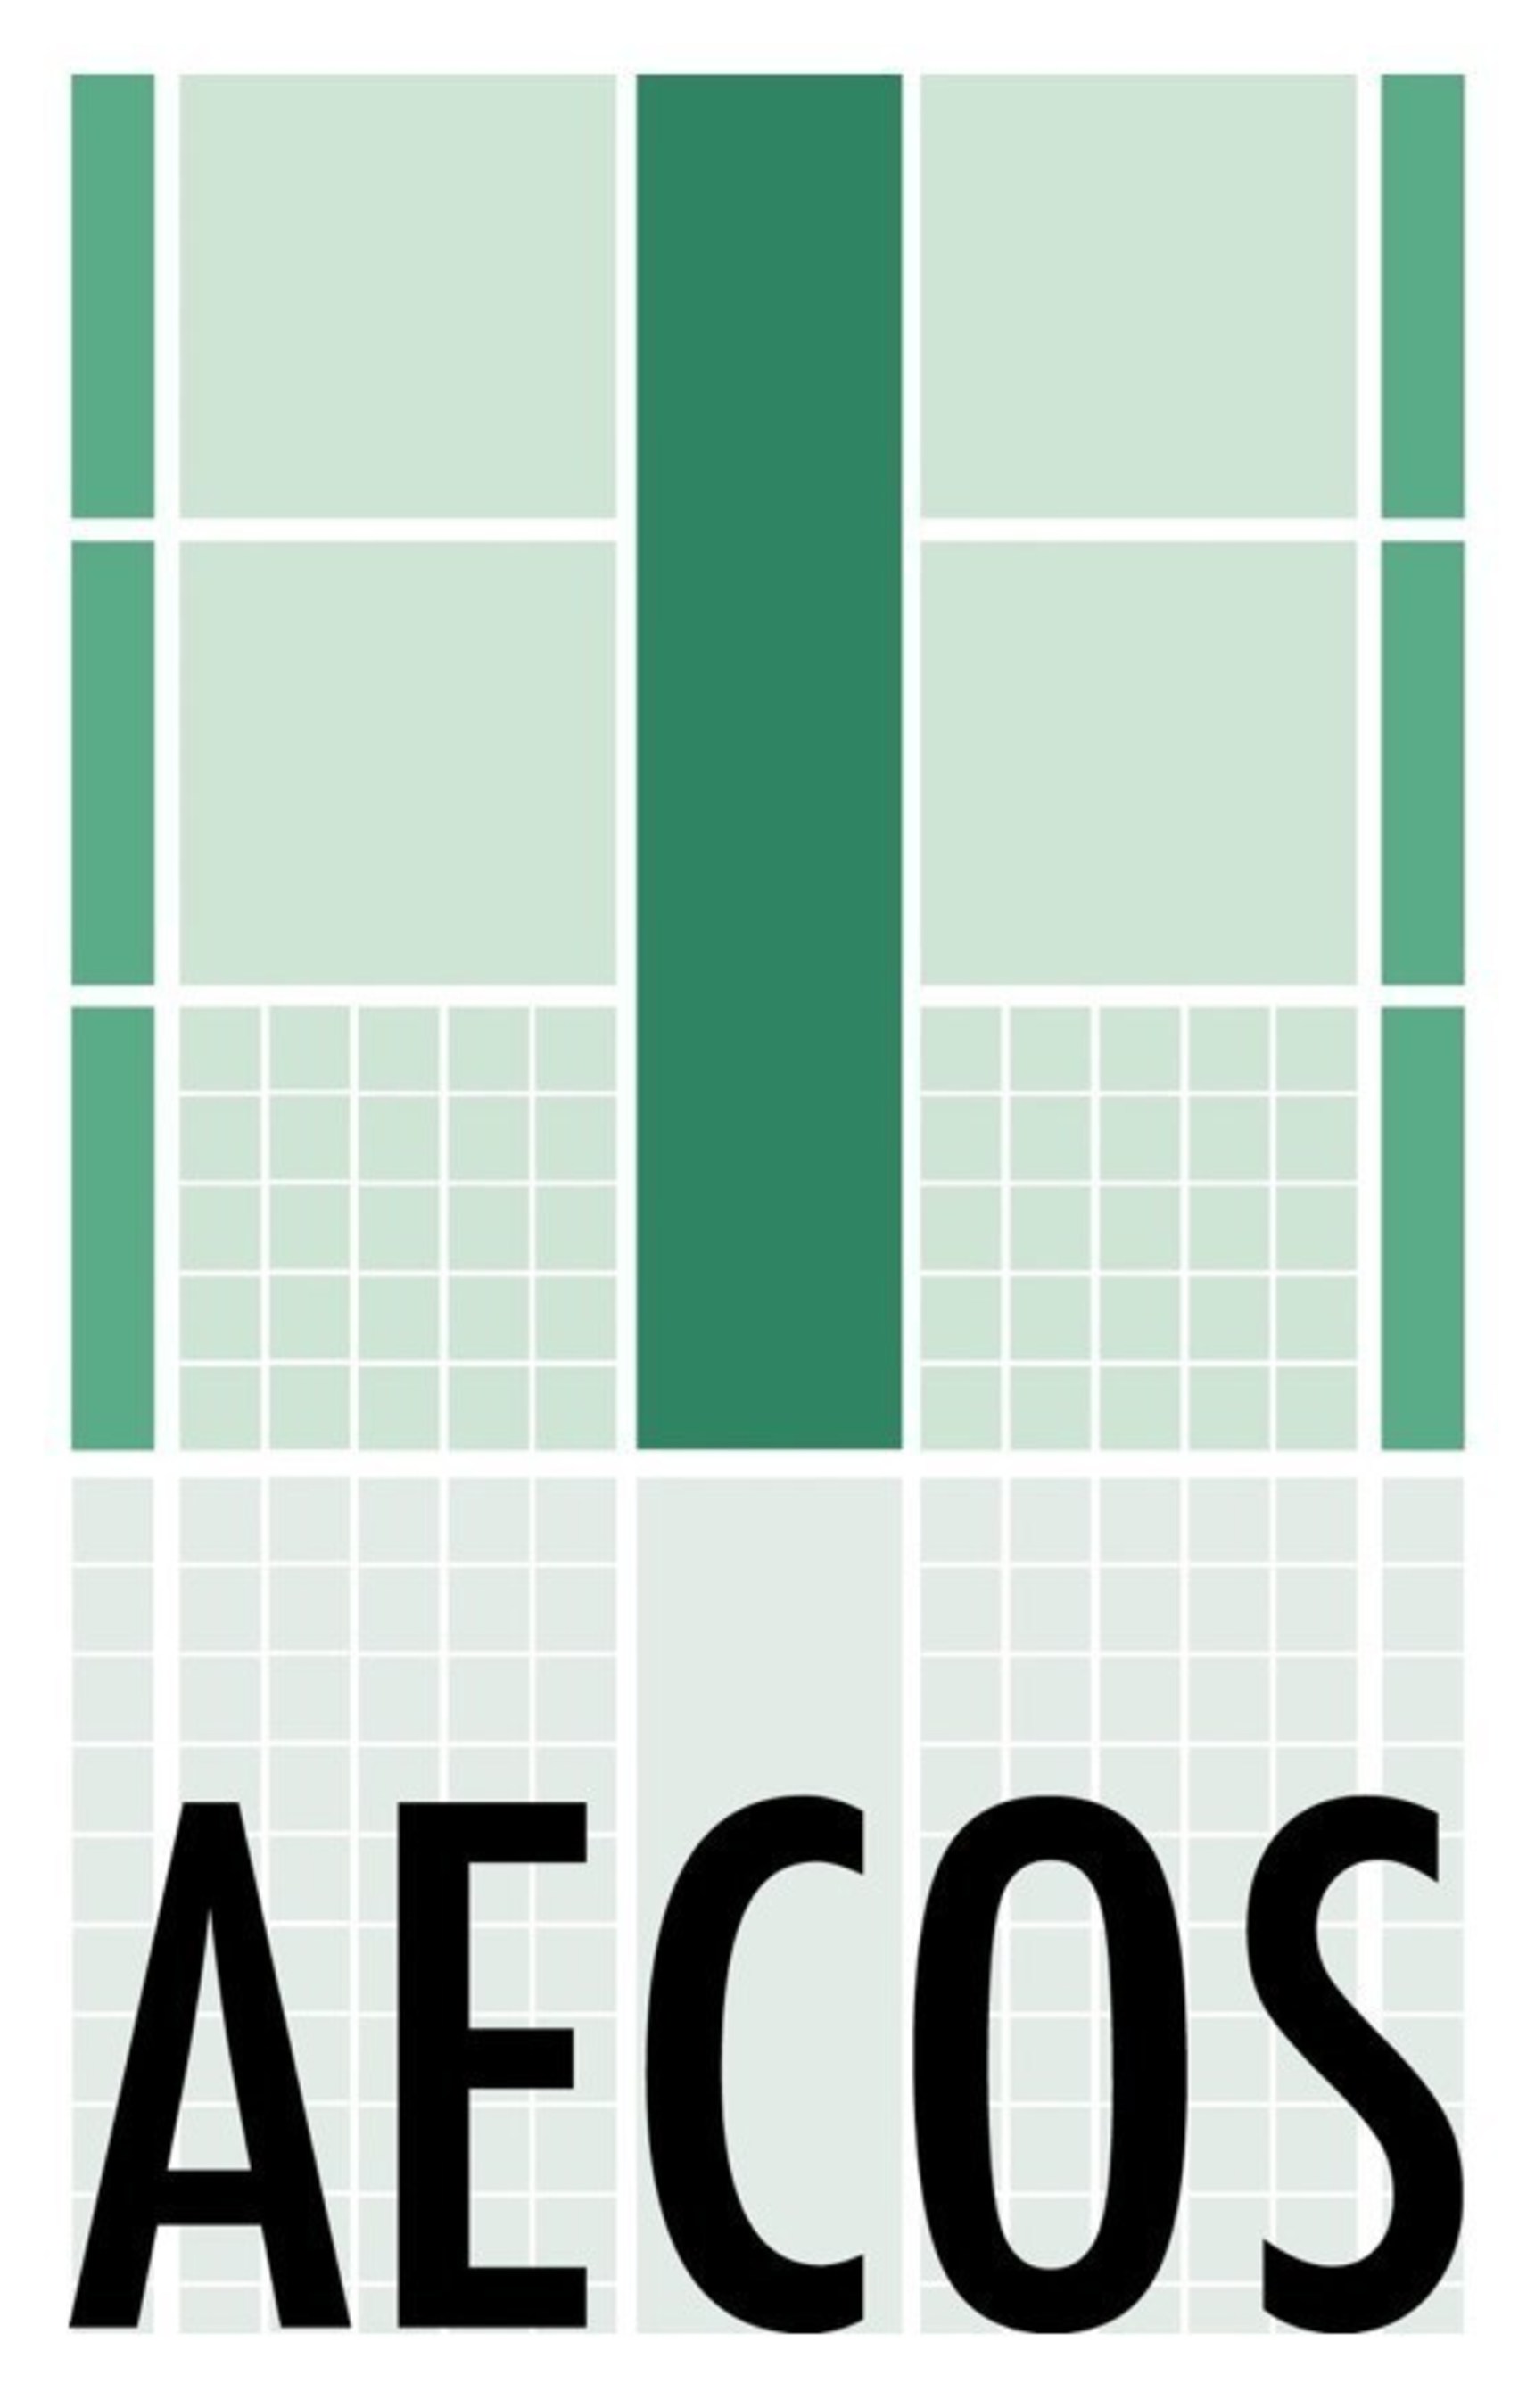 AECOS Logo